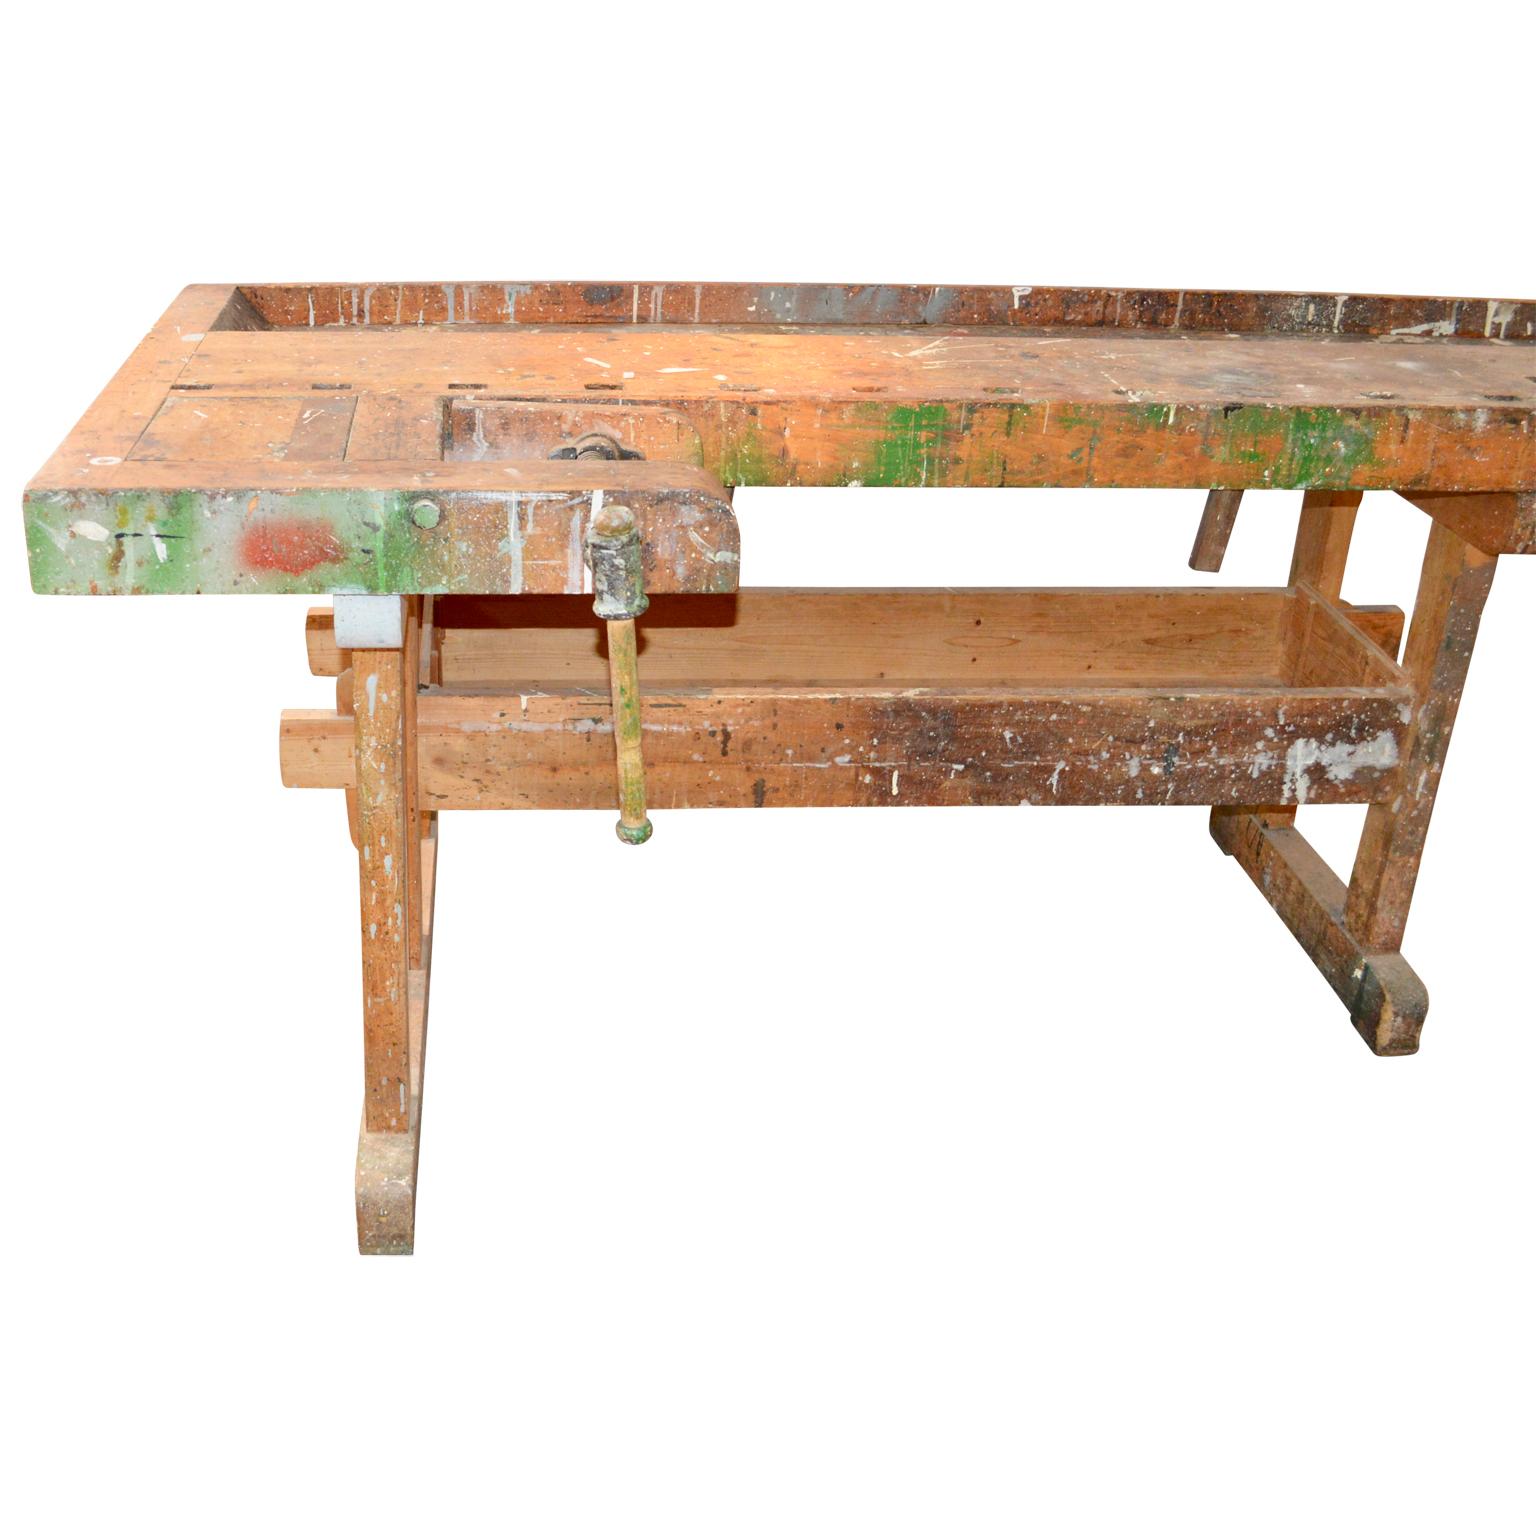 carpenter's table